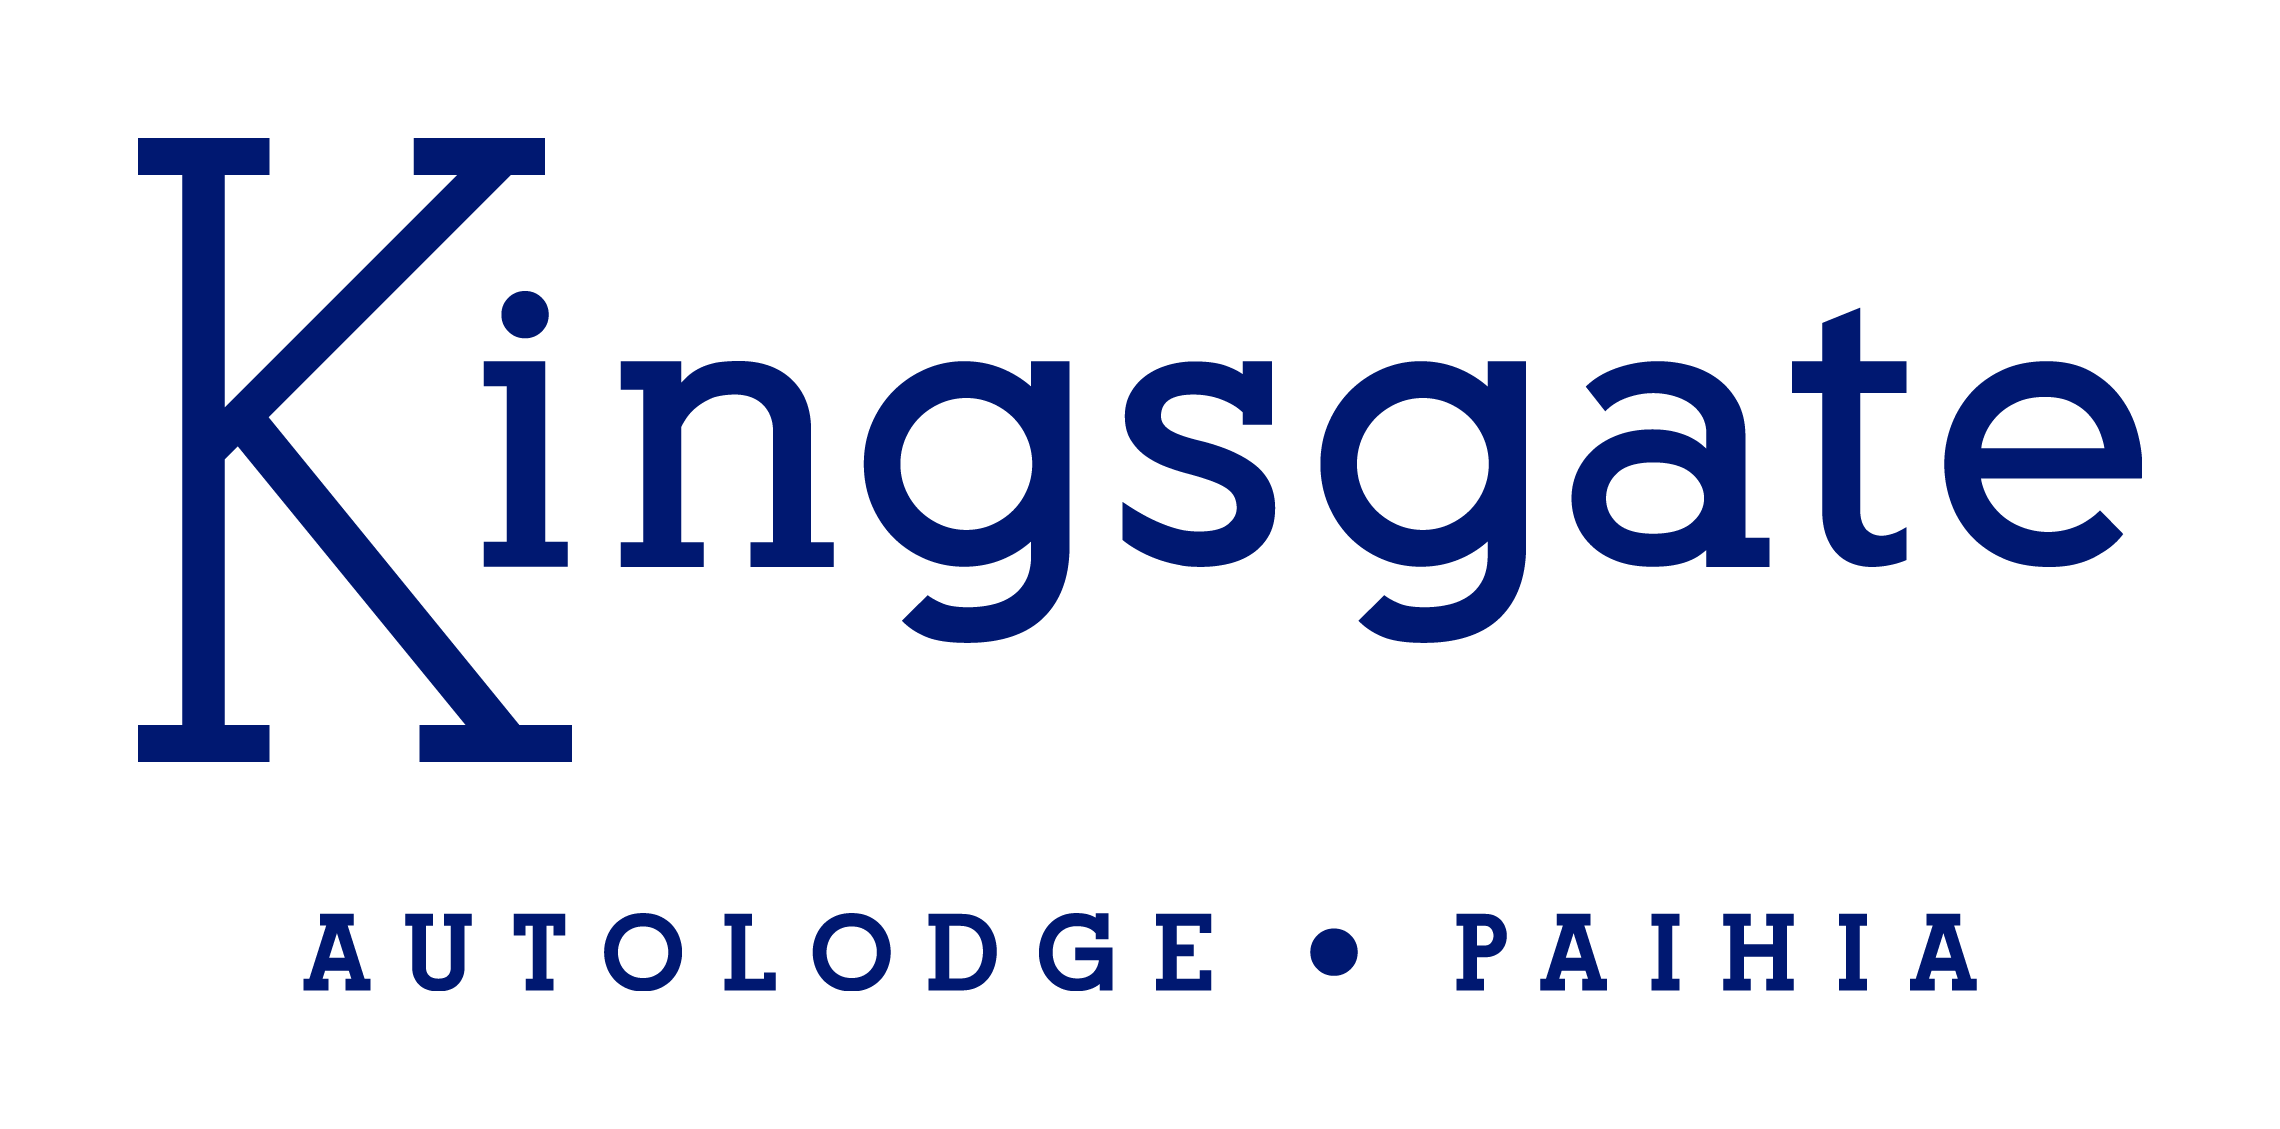 
Kingsgate Hotel Autolodge Paihia